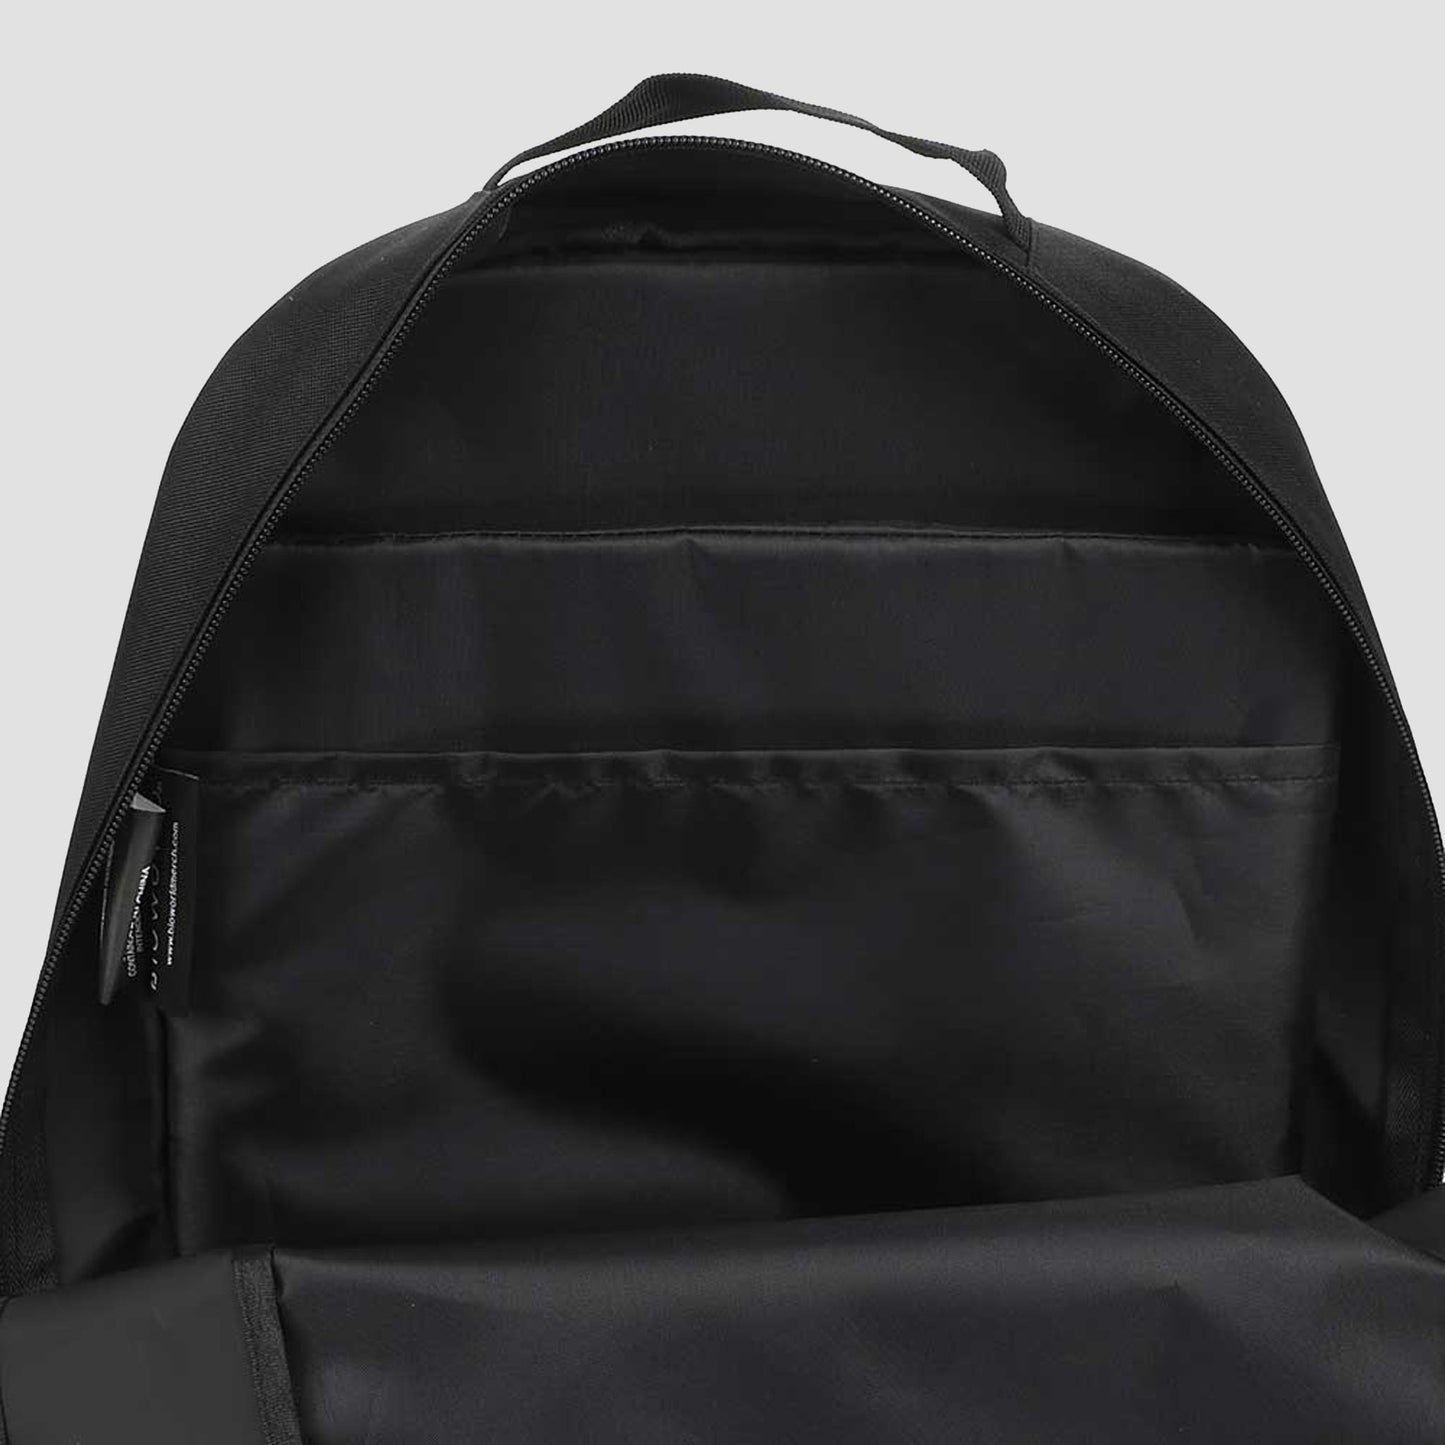 The Black Swordsman (Berserk) Sublimated Laptop Backpack